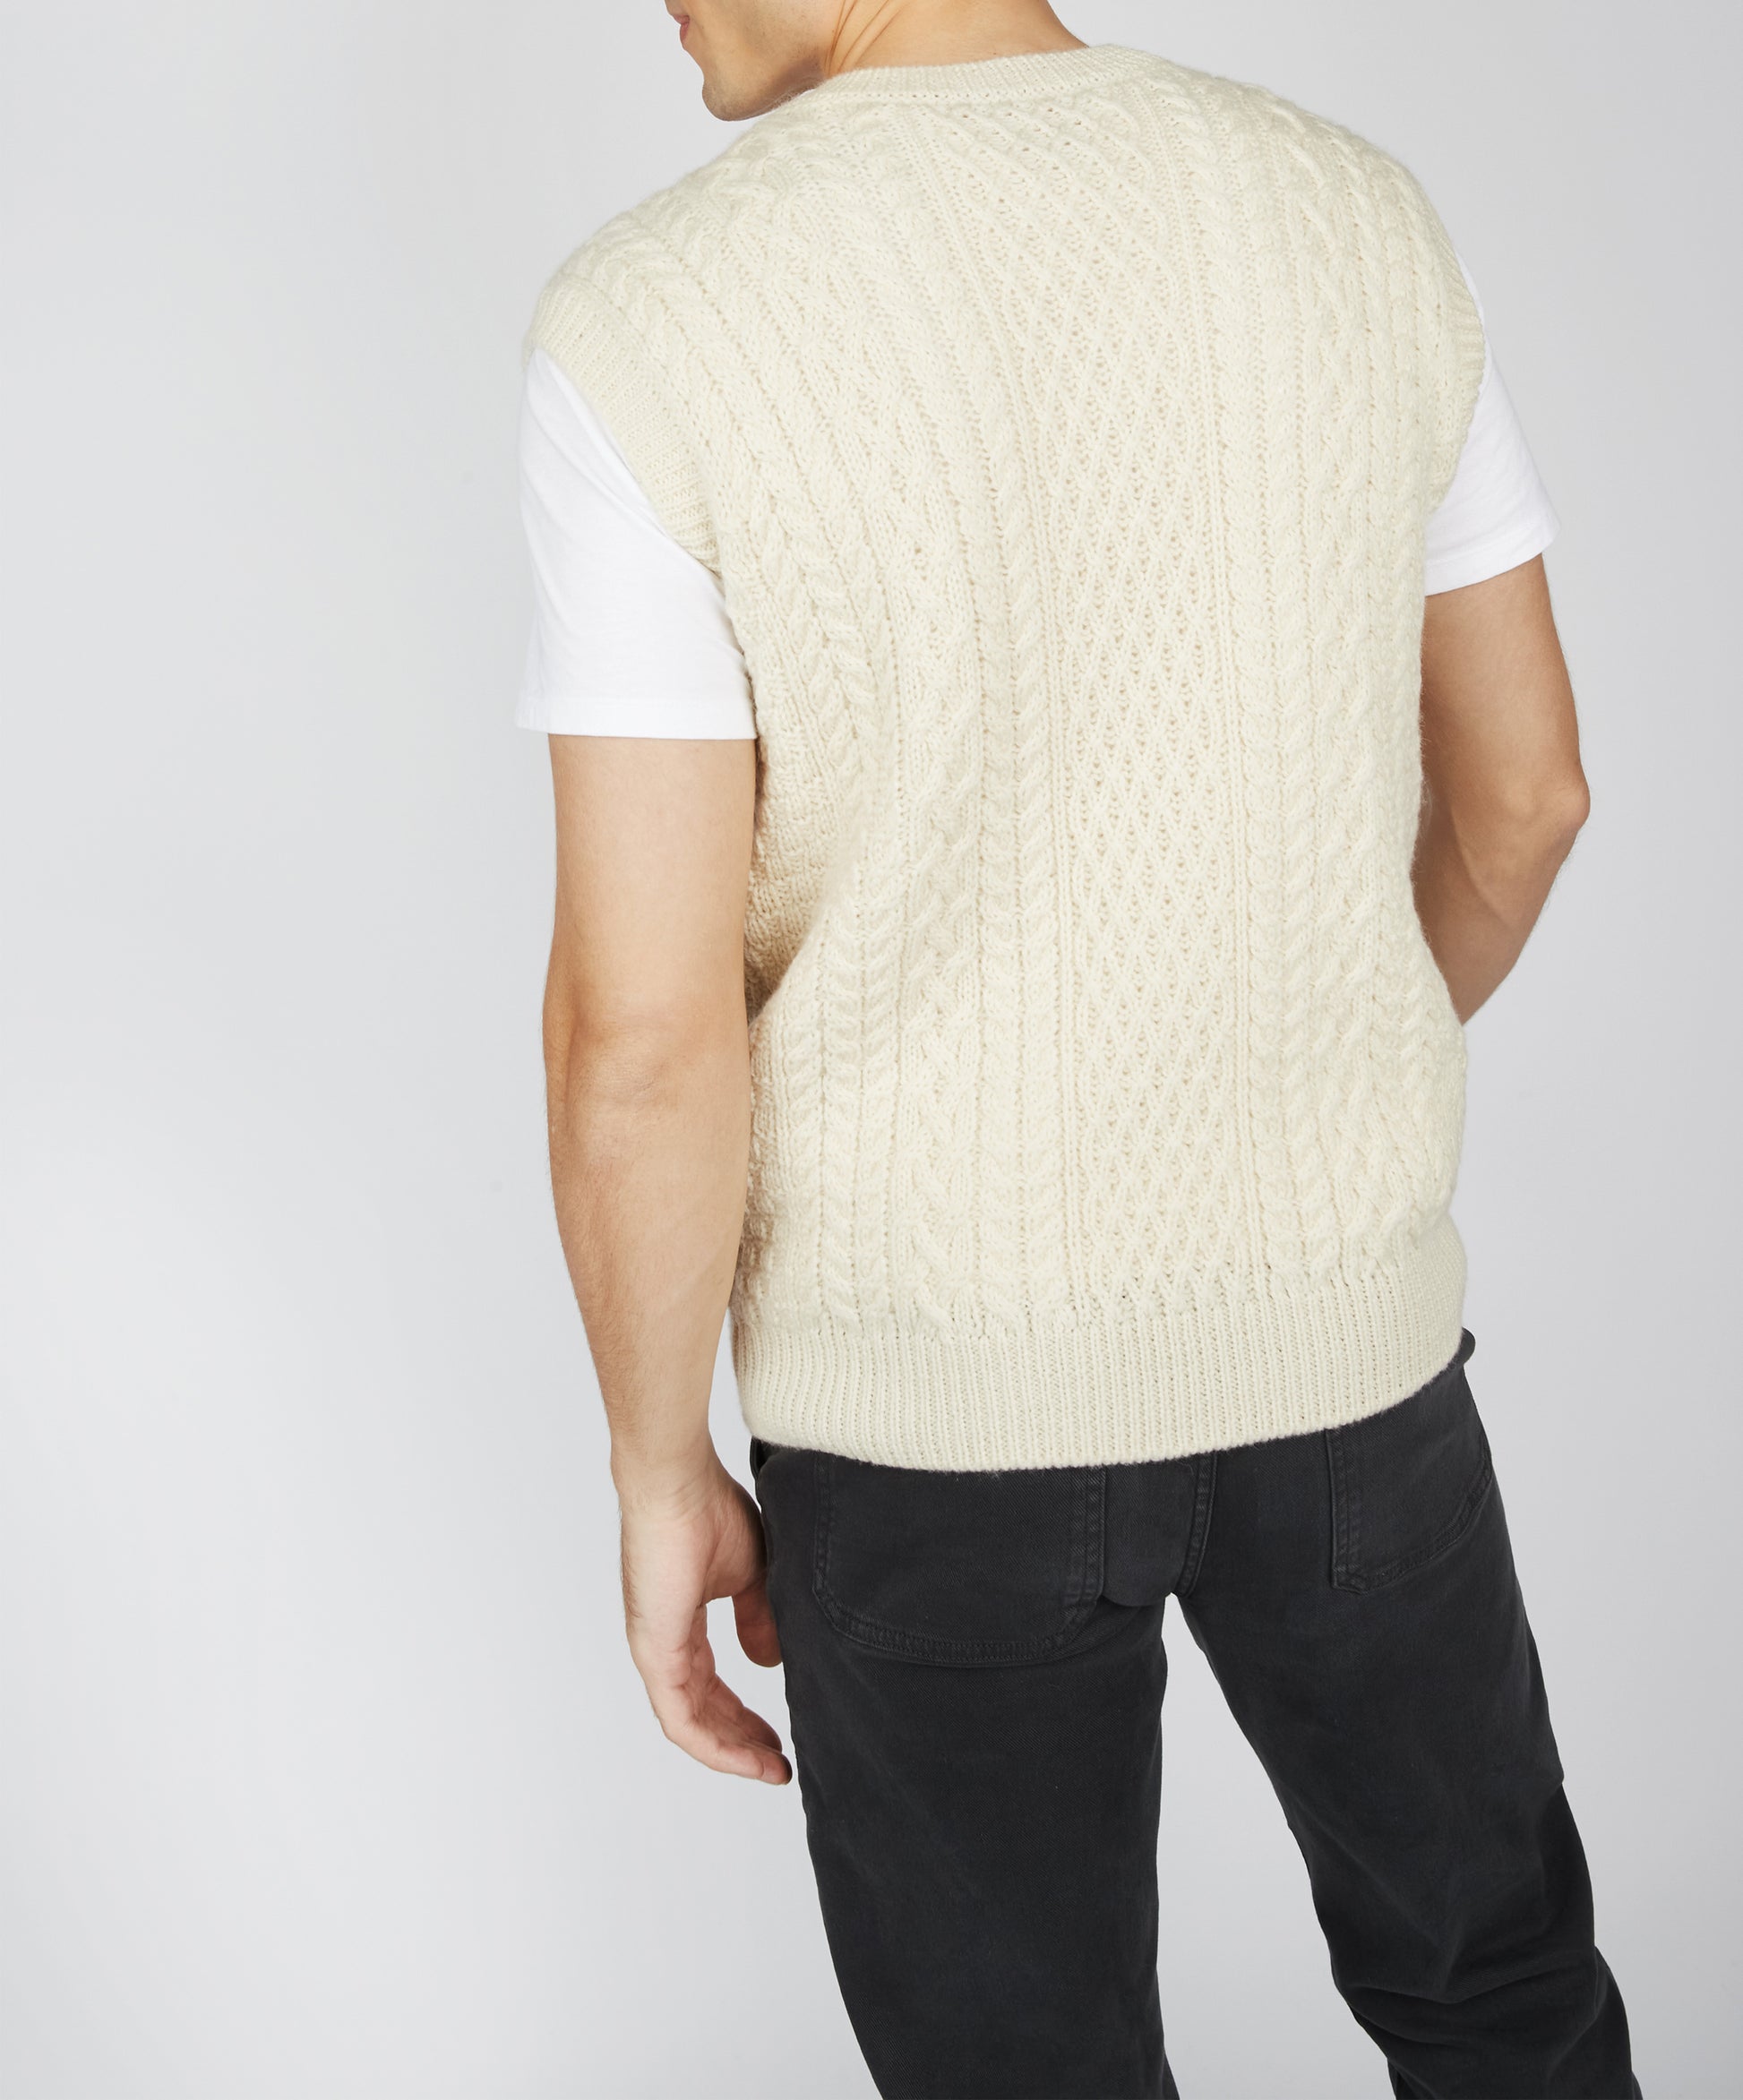 IrelandsEye Knitwear Mens Birch Aran V-Neck Sweater in Natural